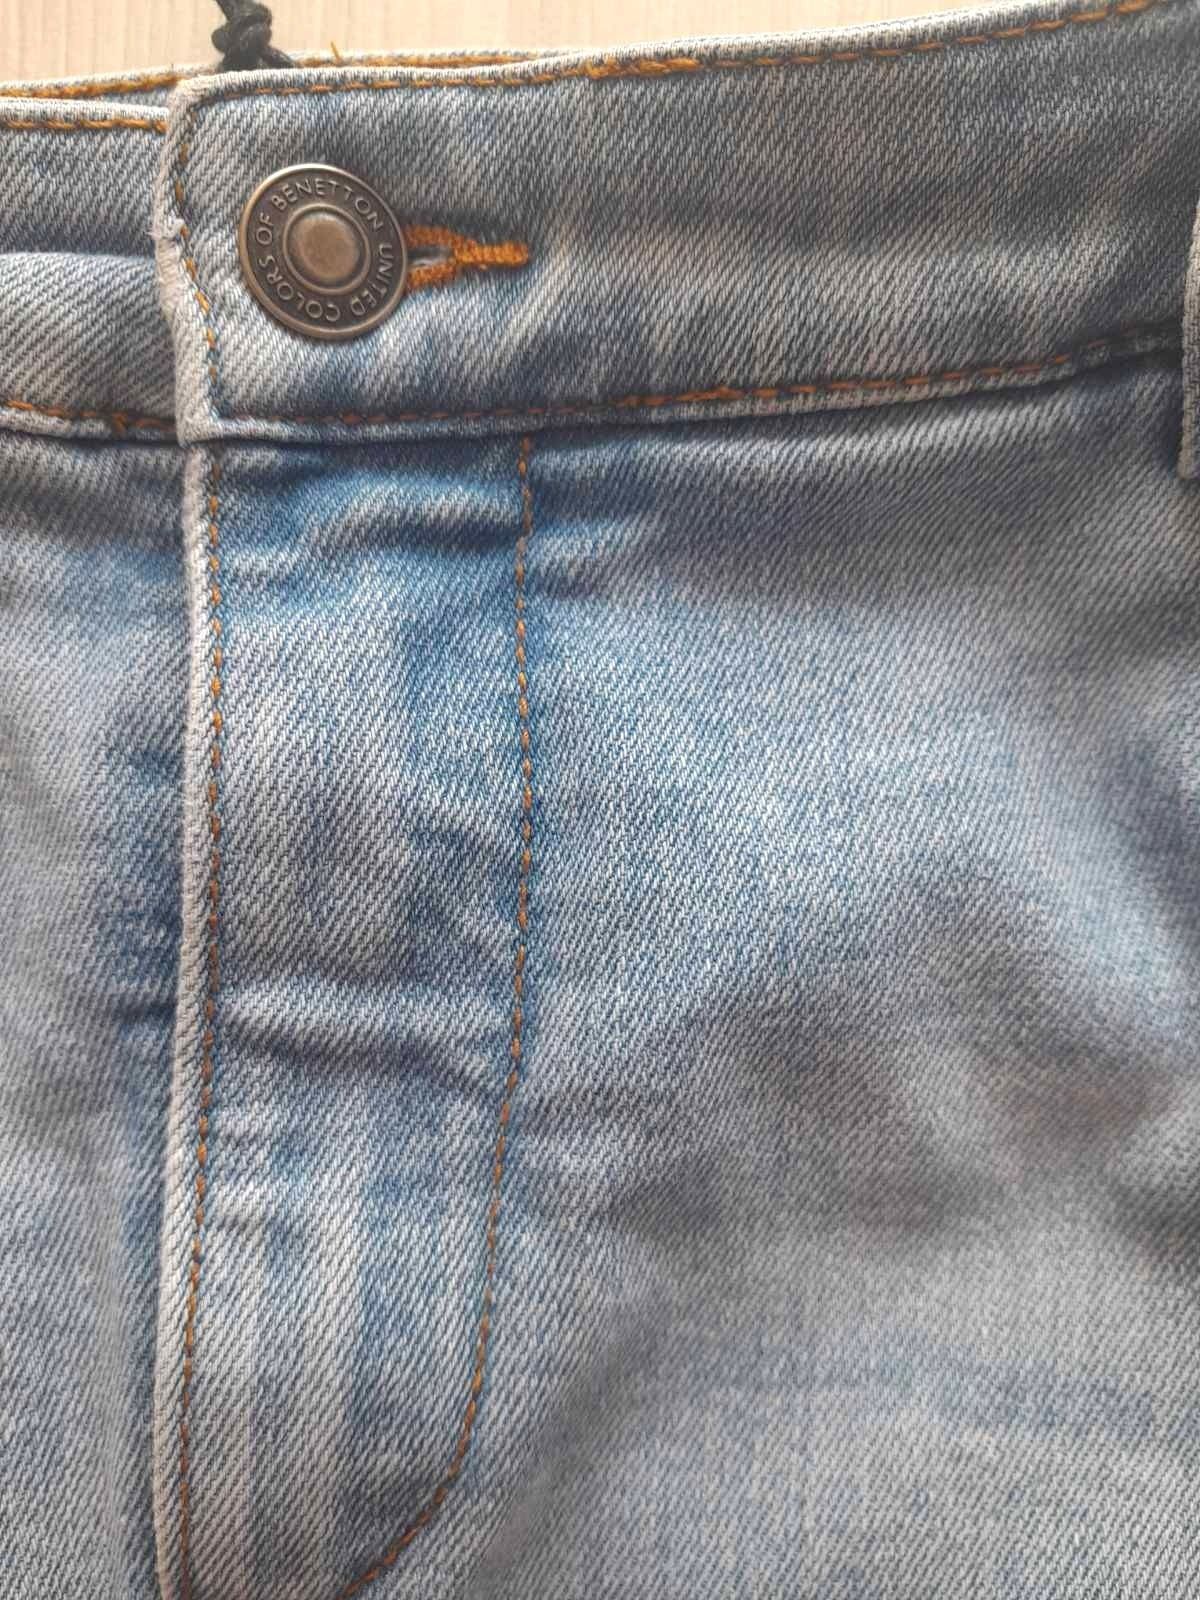 Юбка джинсовая Benetton размер М